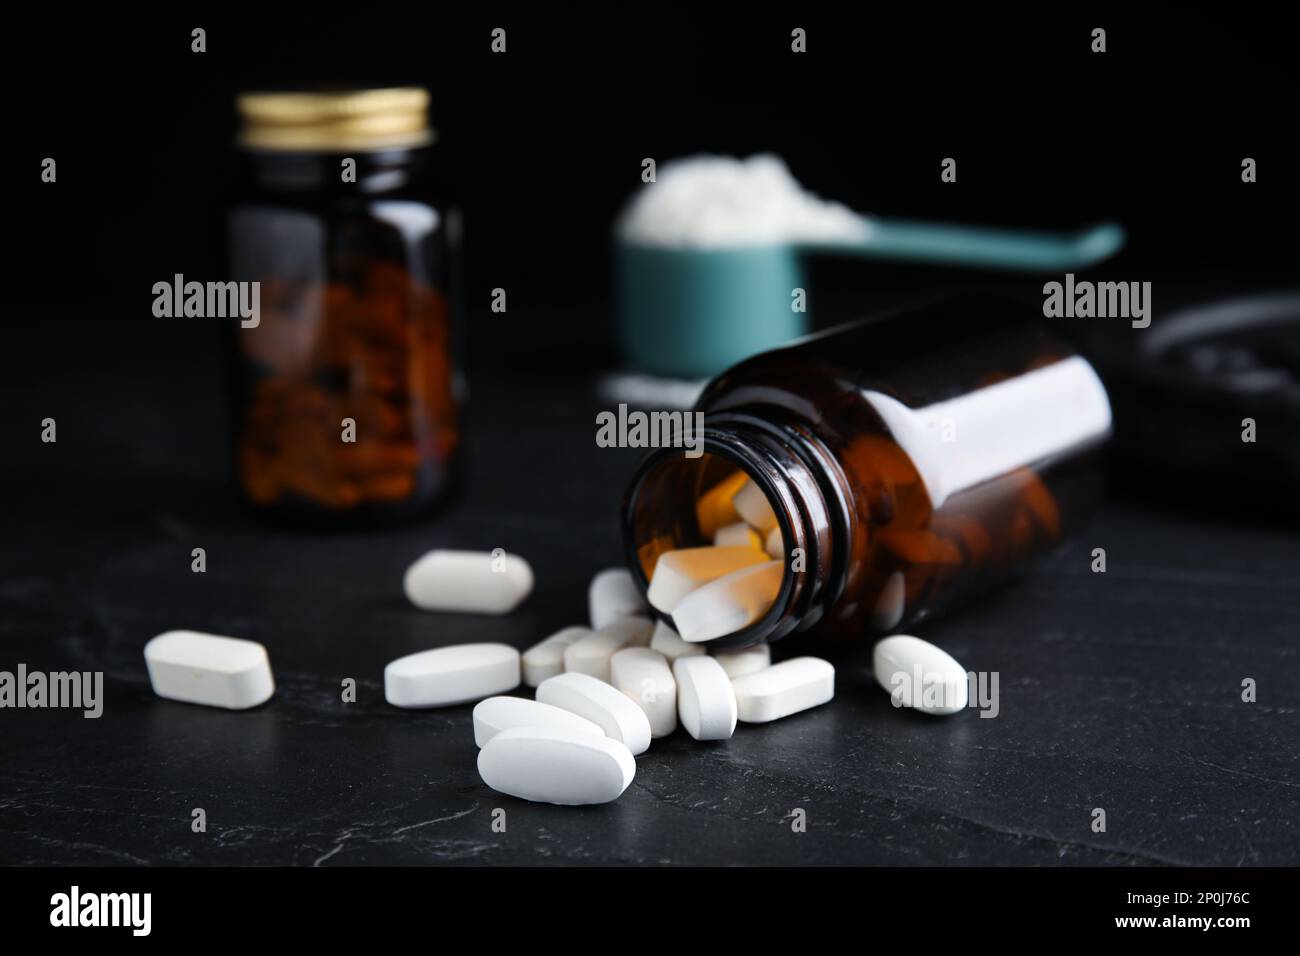 Bottle and amino acid pills on black table Stock Photo